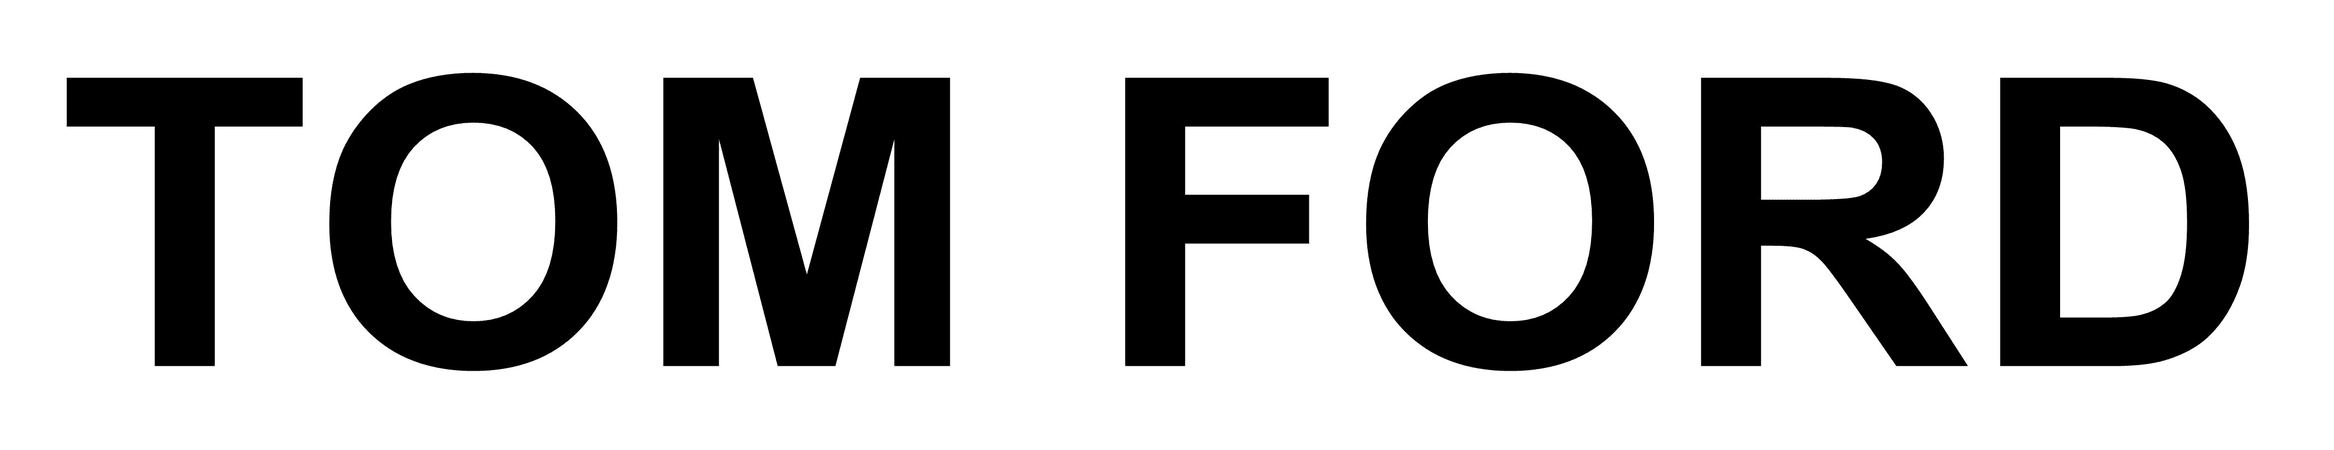 tom ford logo - Google Search